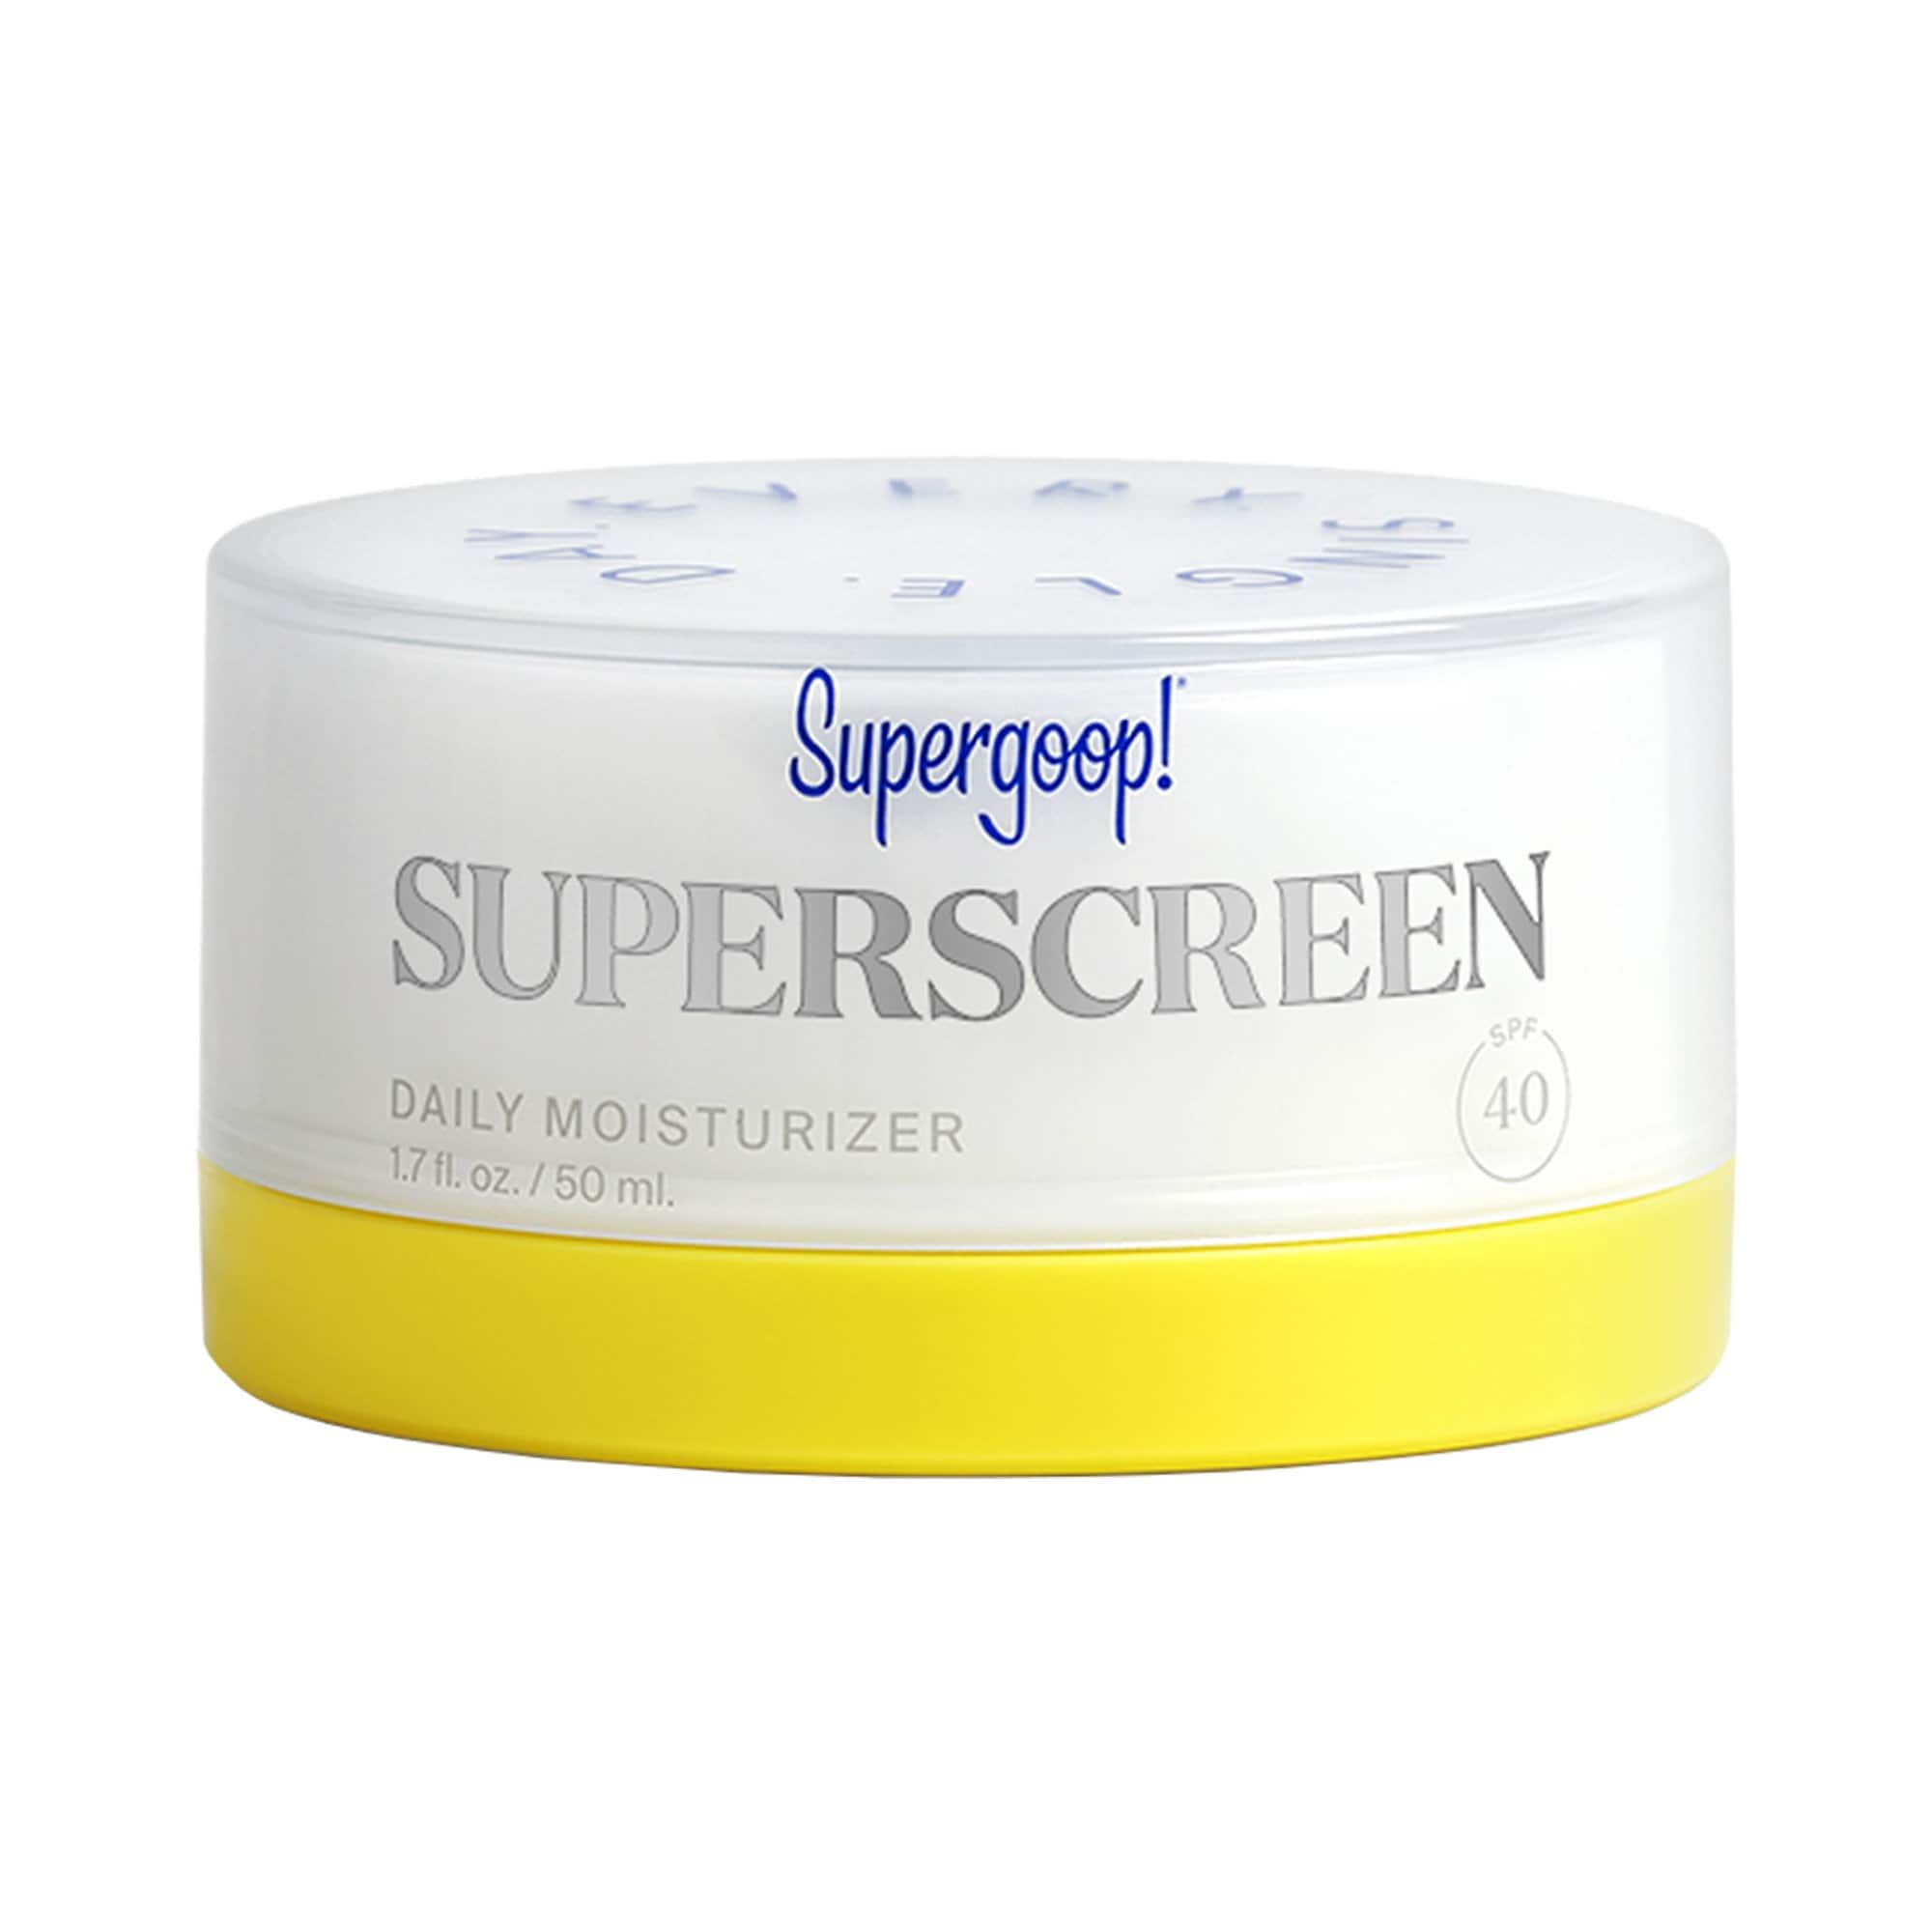 Superscreen Daily Moisturizer Broad Spectrum SPF 40 PA+++